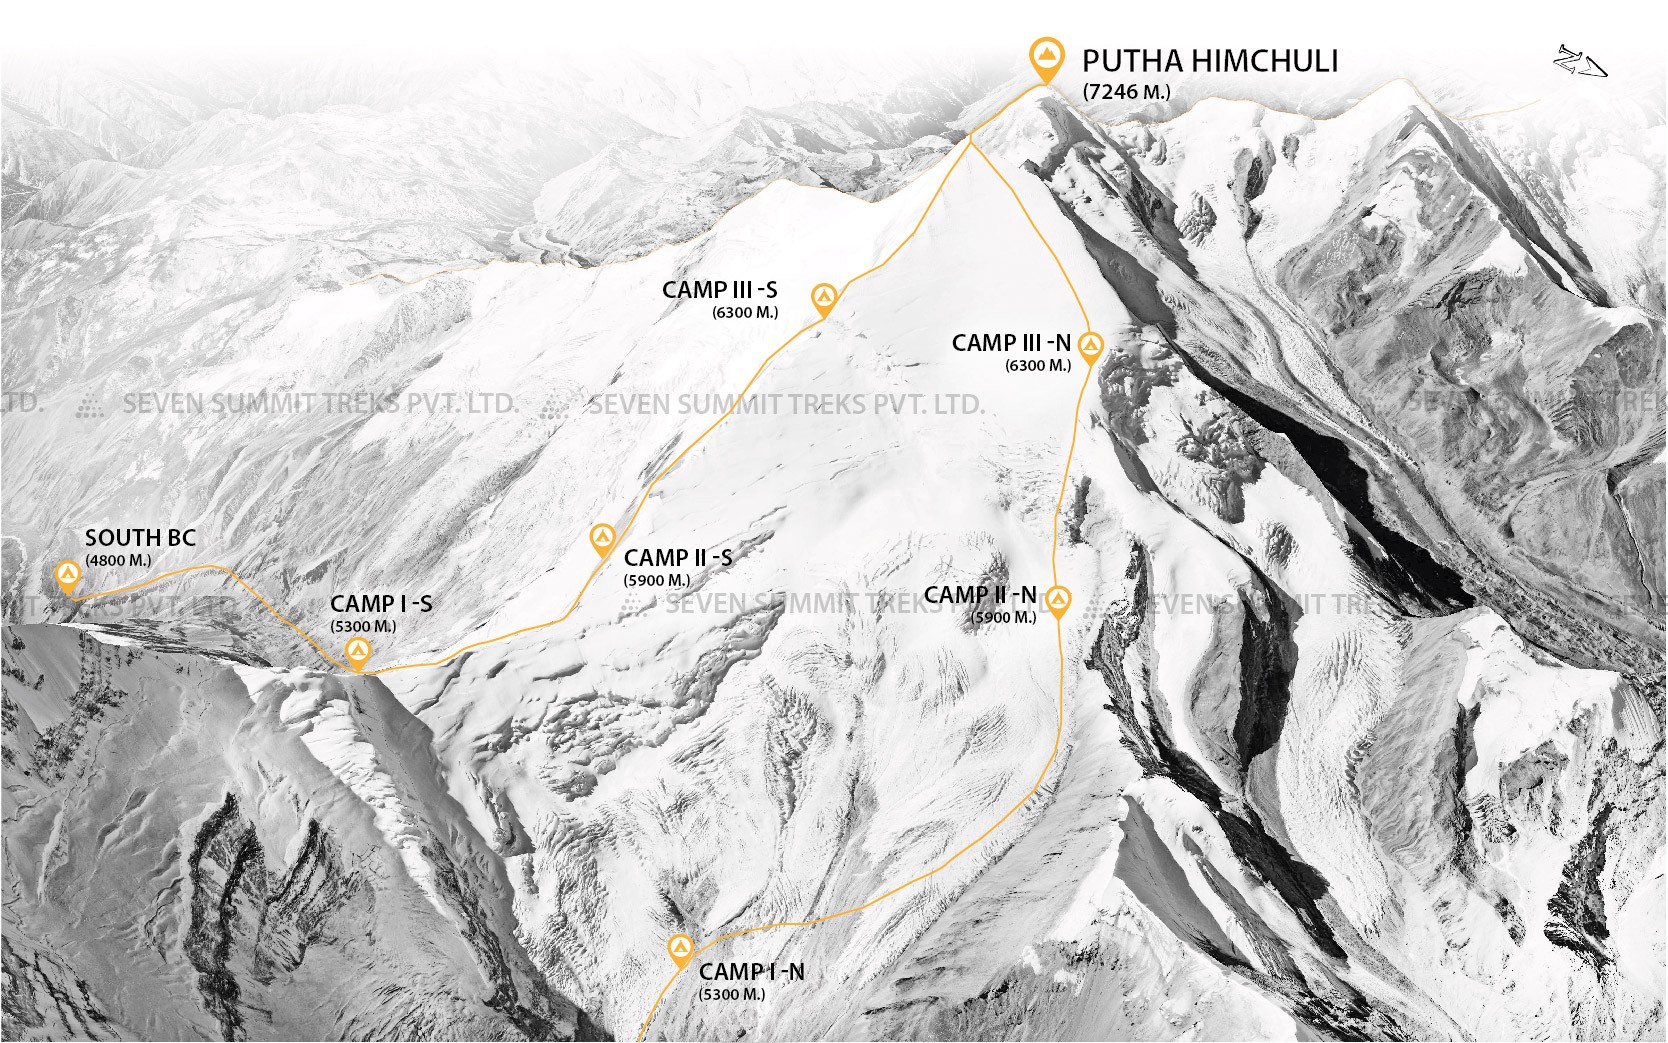  PUTHA HIUNCHULI EXPEDITION (7246M) - DHAULAGIRI VII 